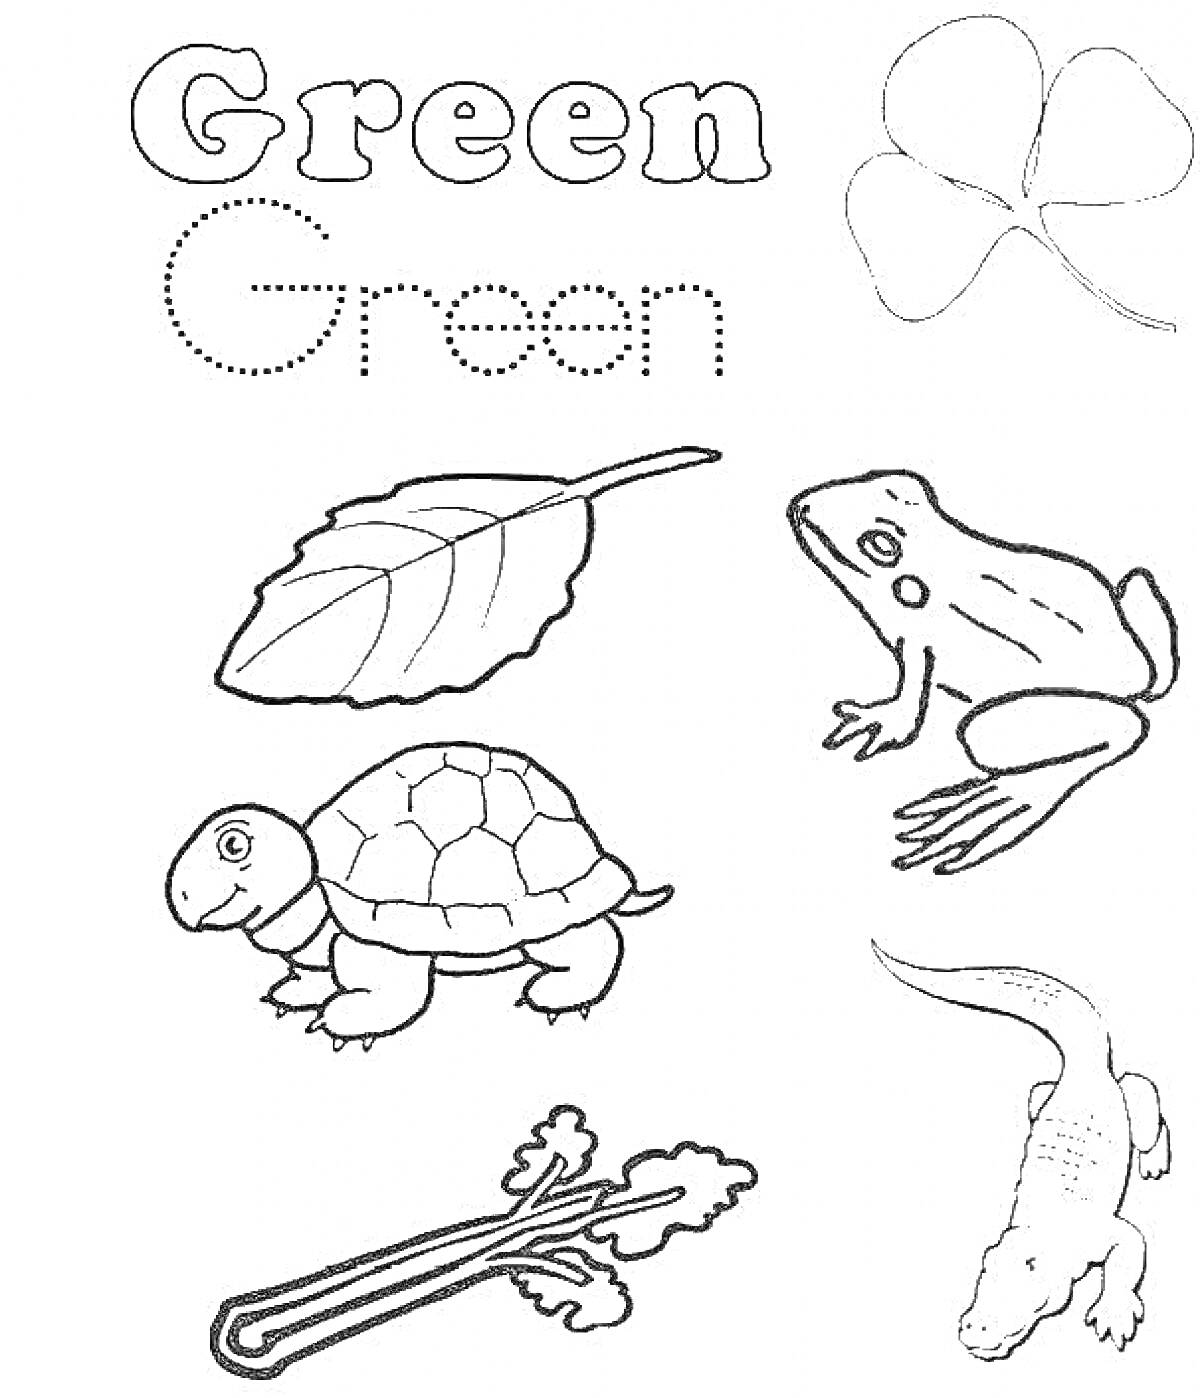 Раскраска Green - лист, клевер, лягушка, черепаха, кайман, сельдерей